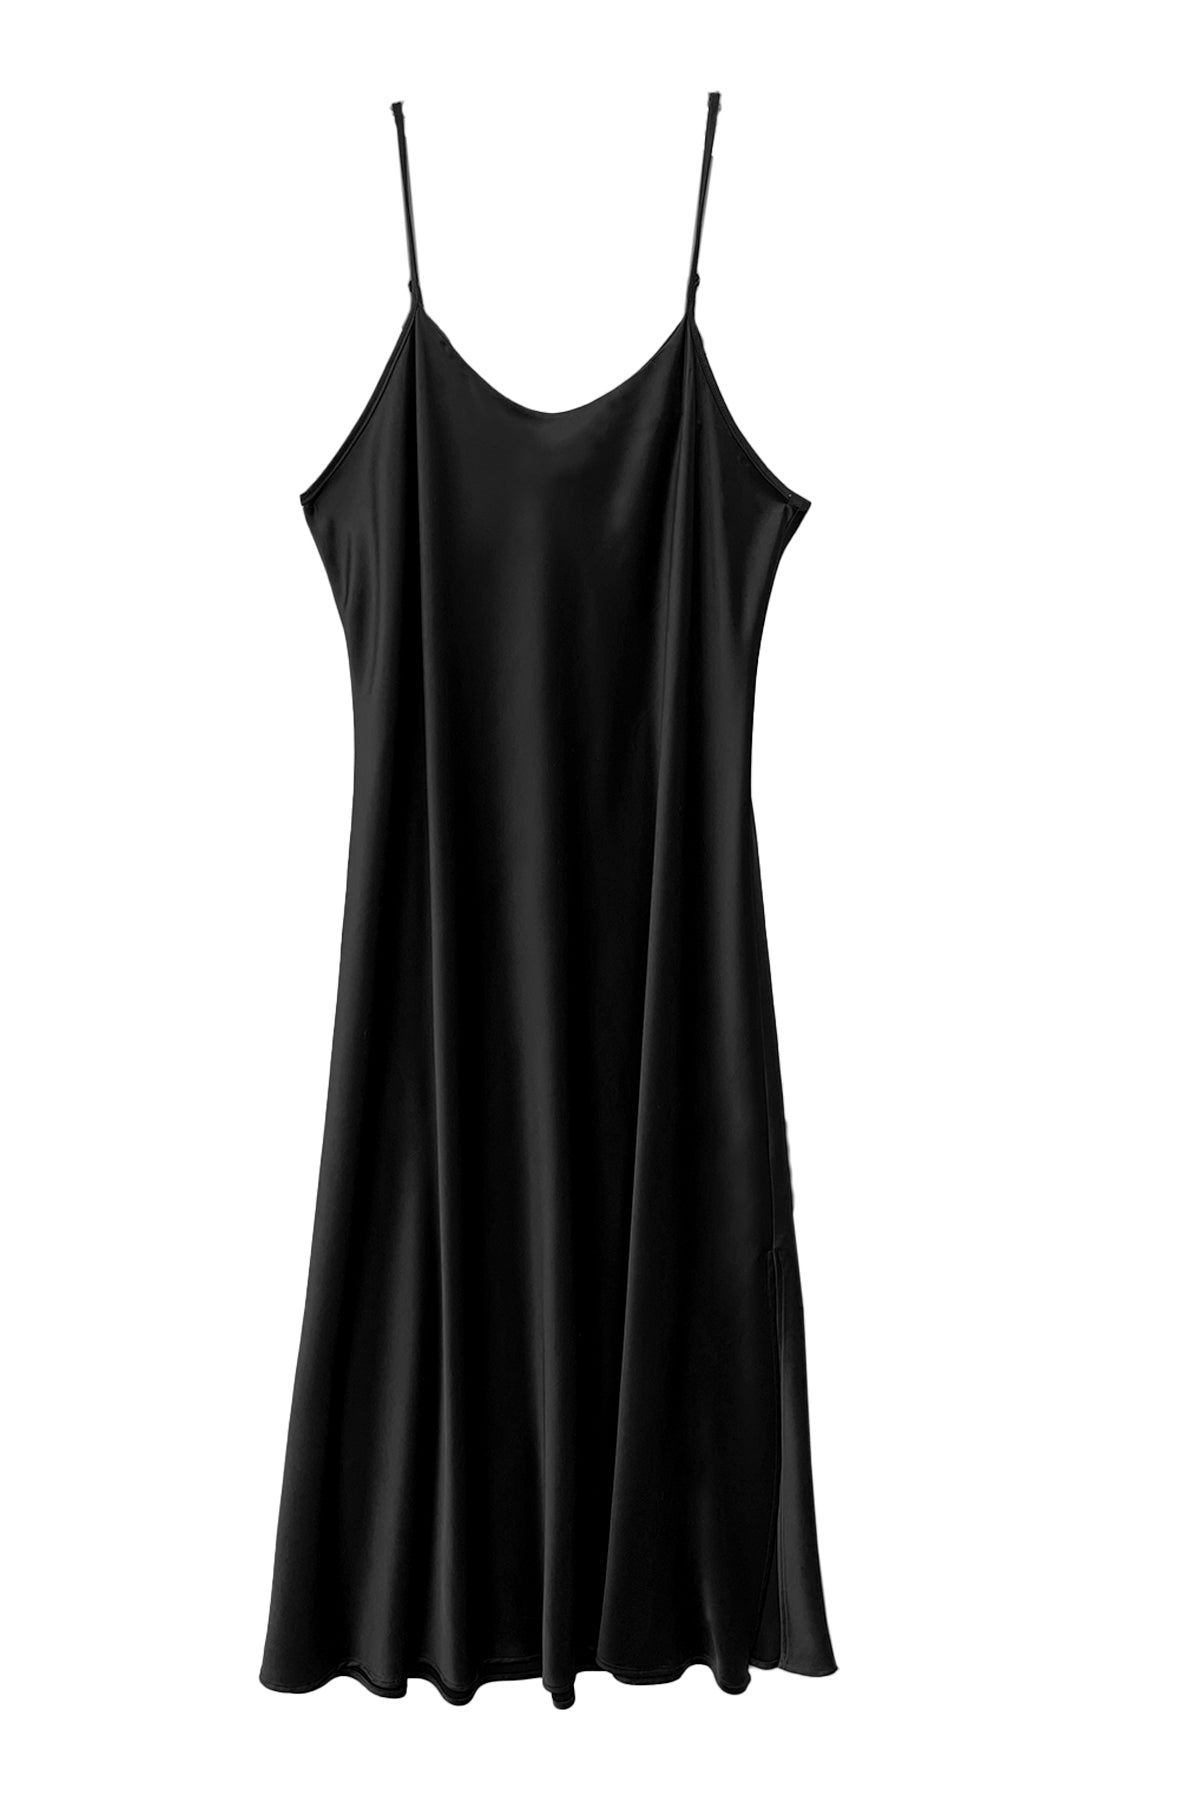 Flat of black leah dress